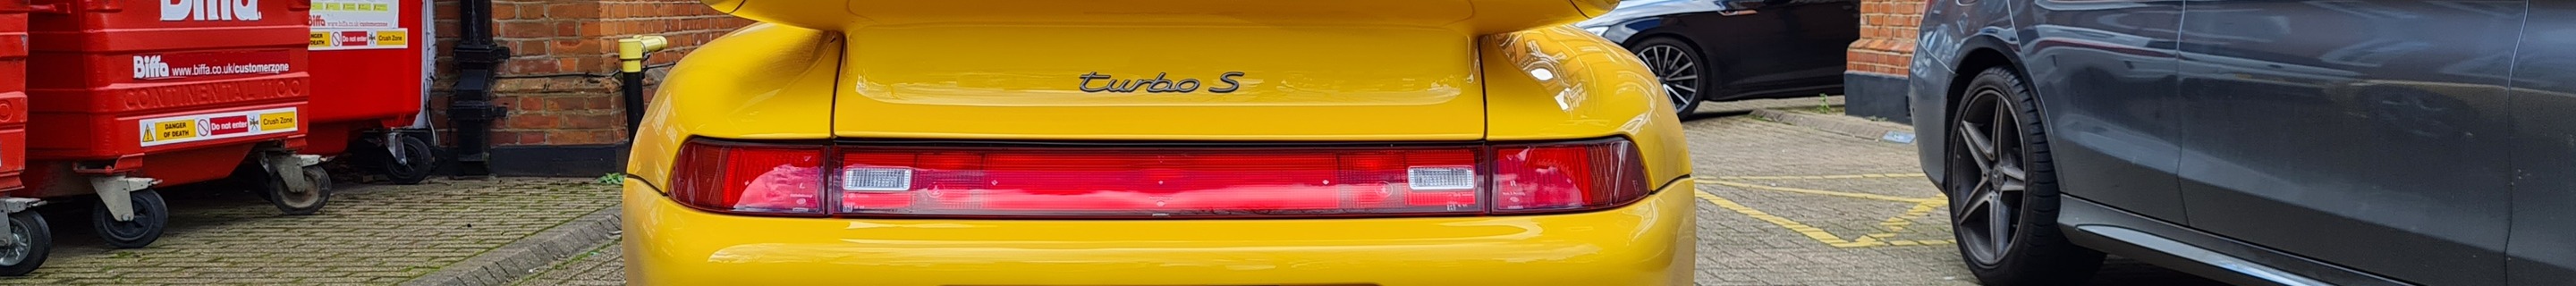 Porsche 993 Turbo S